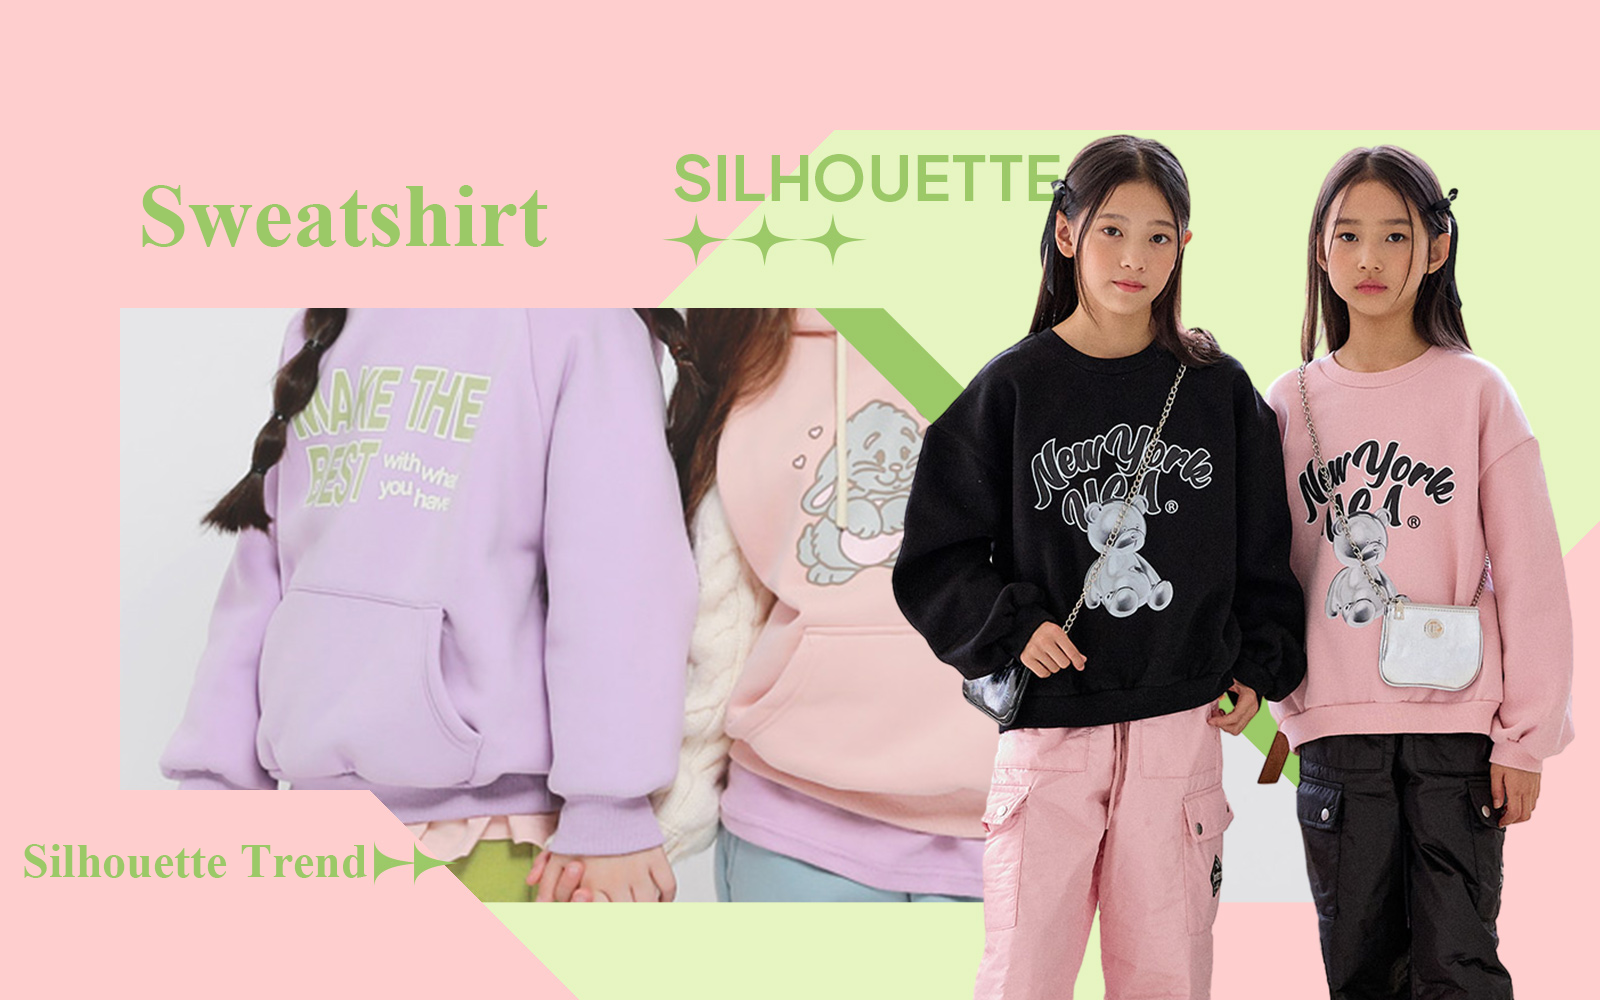 The Silhouette Trend for Girls' Sweatshirt